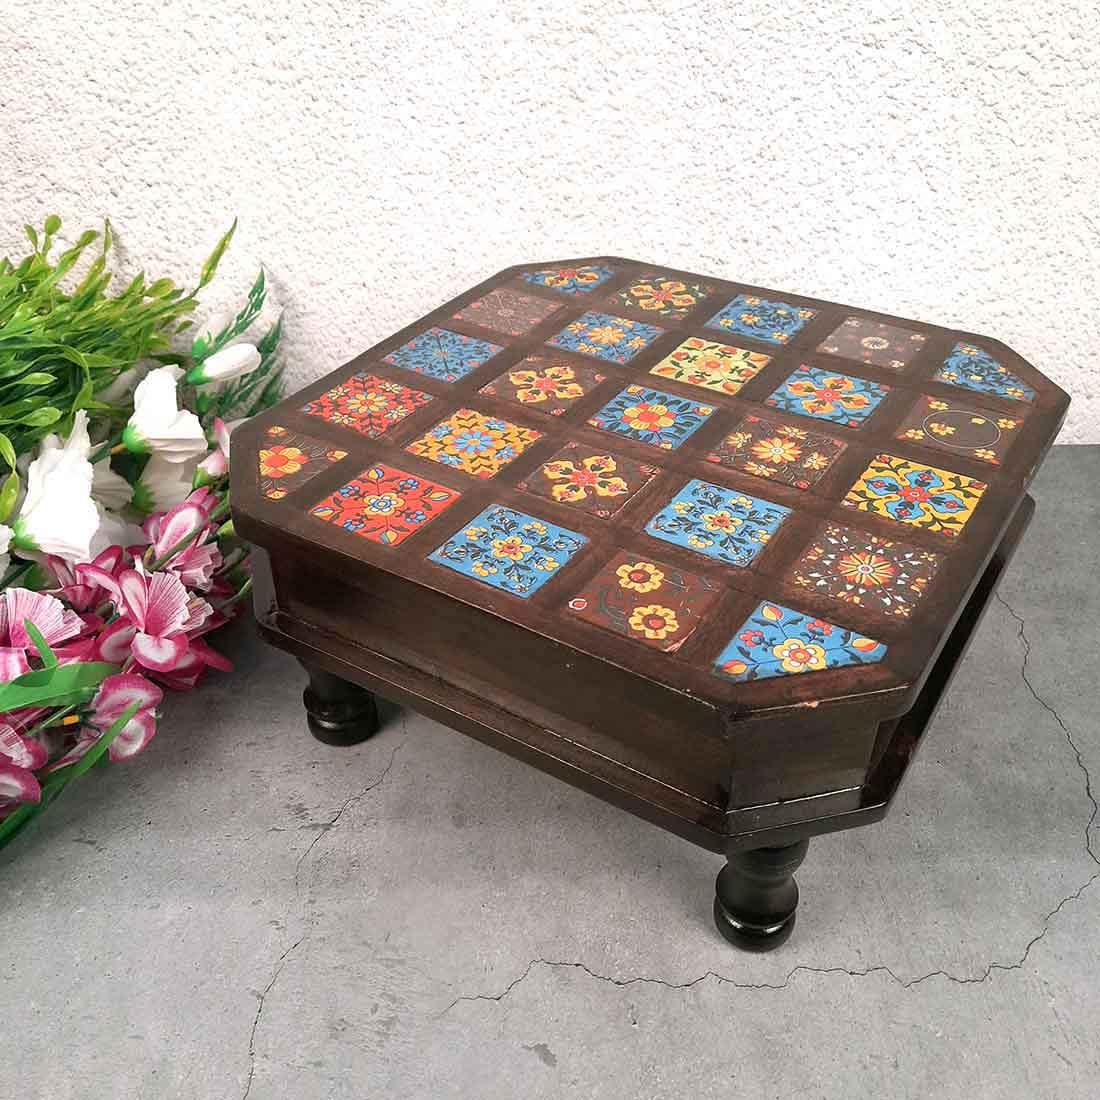 Patla Chowki with Ceramic Tiles - For Pooja, Sitting & Home Decor - 12 Inch